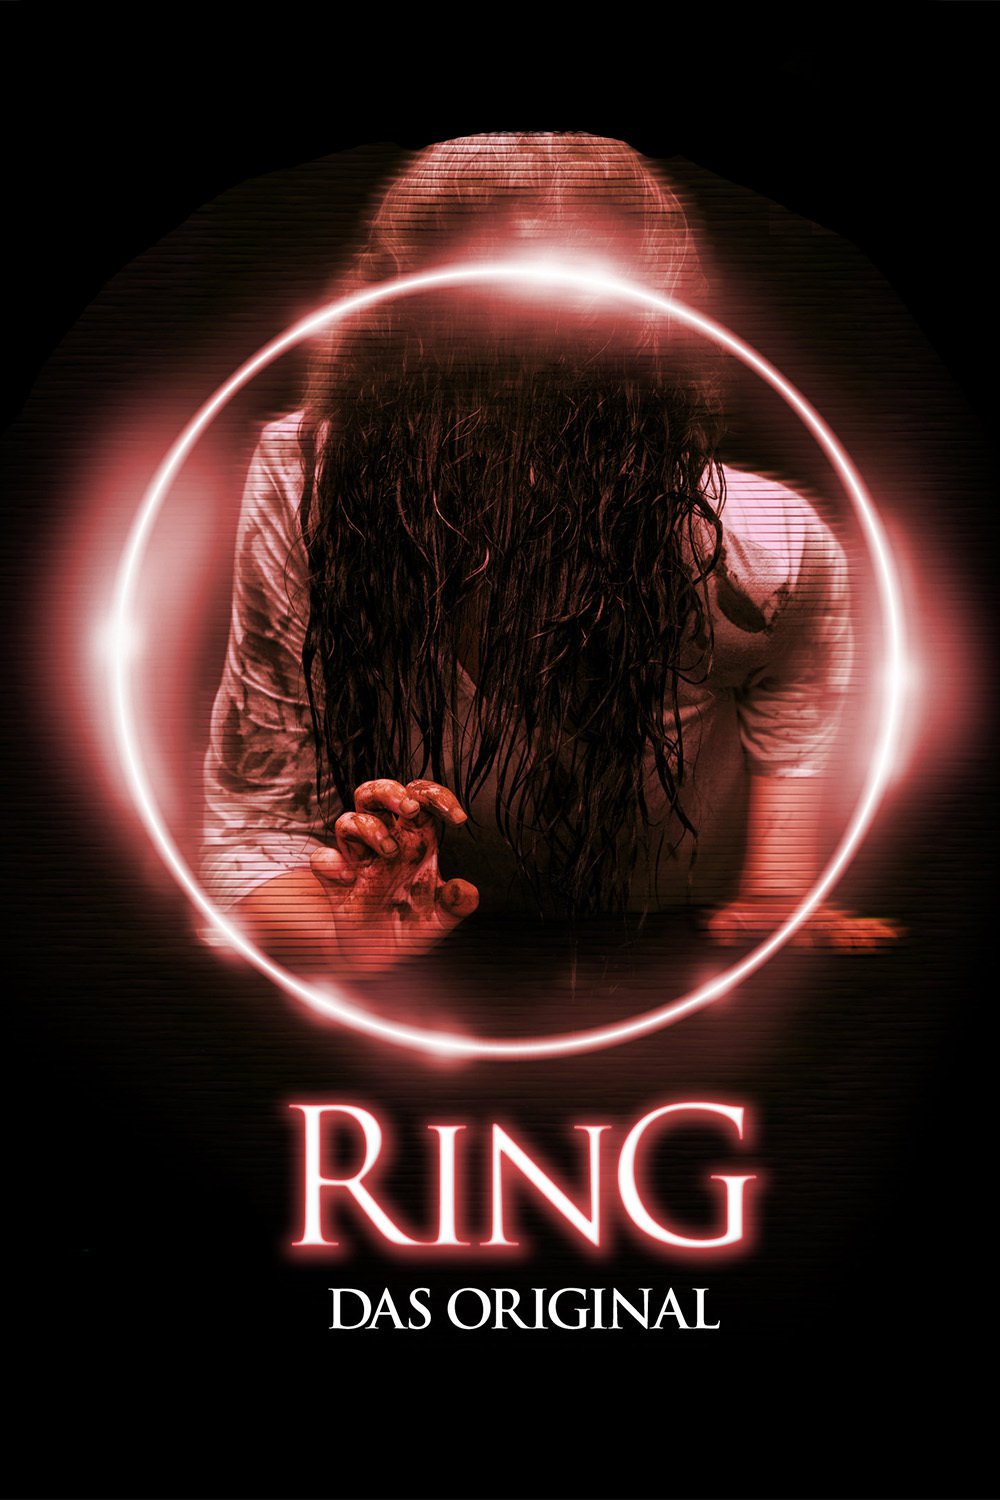 Plakat von "Ring - Das Original"